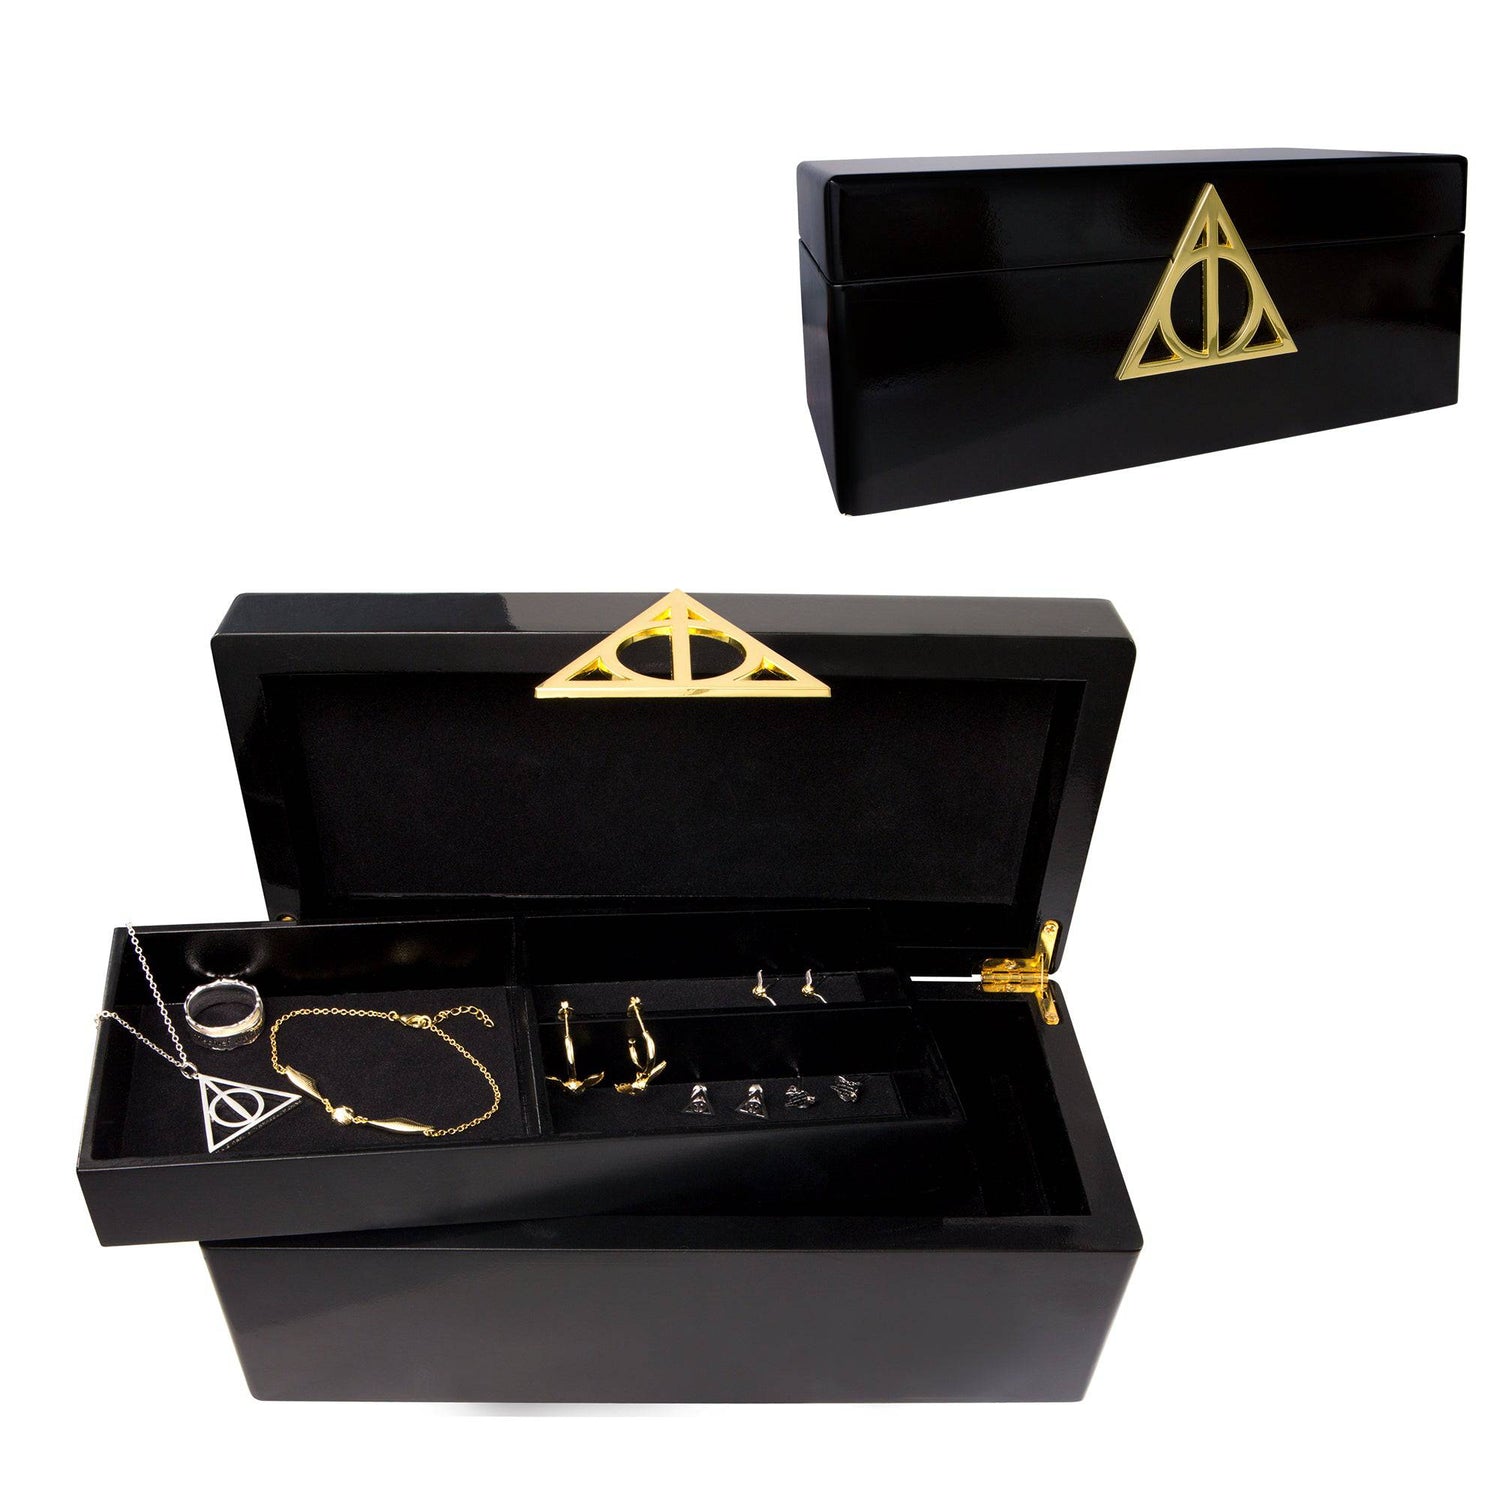 Harry Potter Gift Box